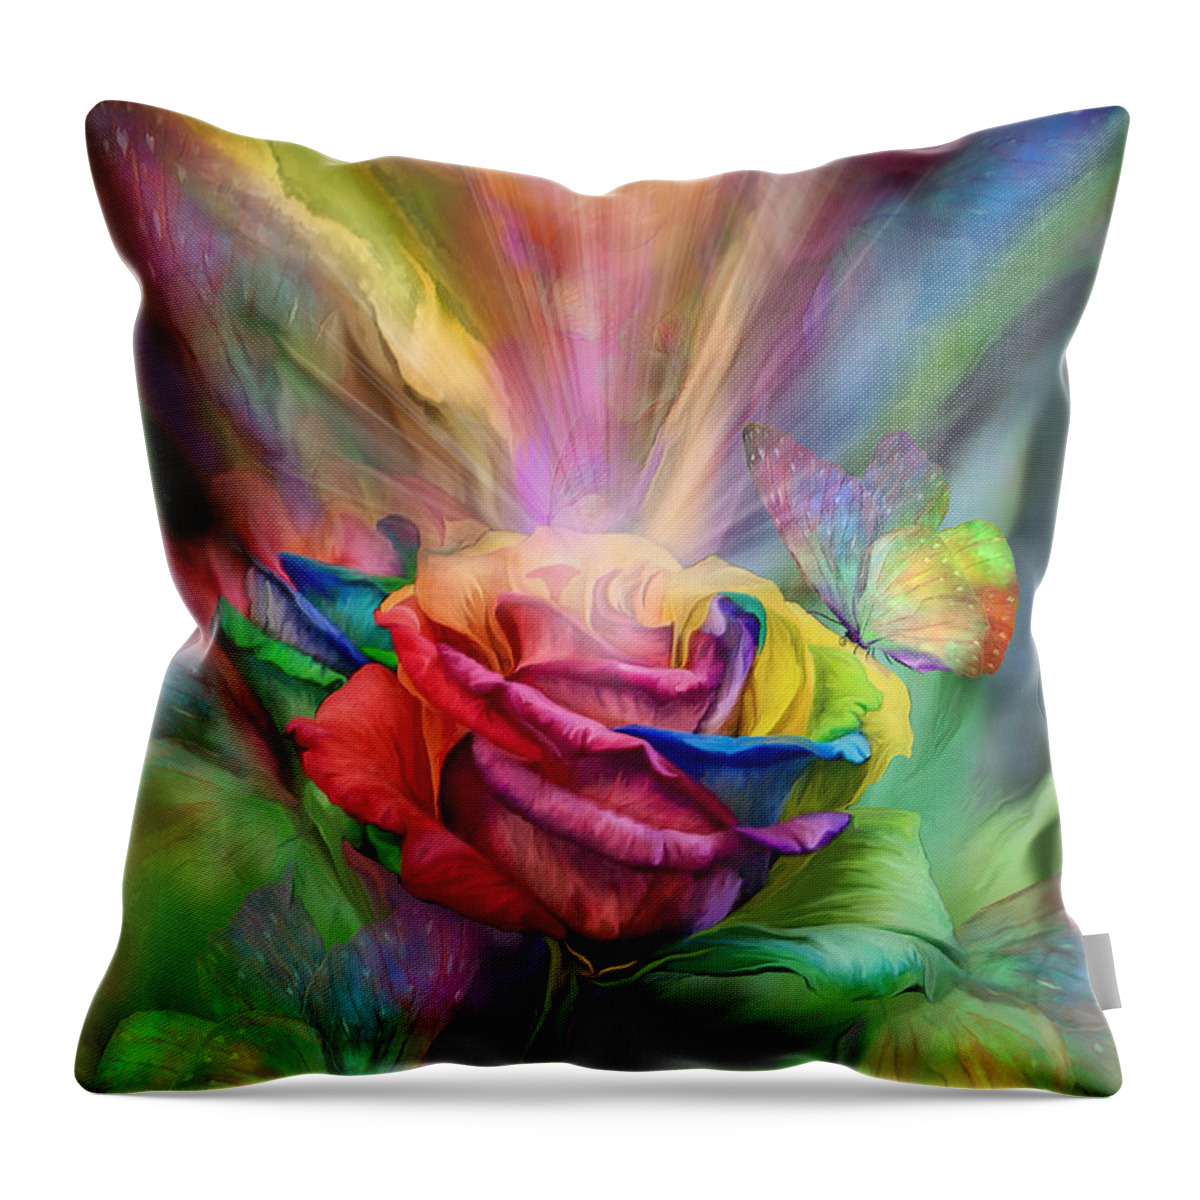 Rose Throw Pillow featuring the mixed media Healing Rose by Carol Cavalaris